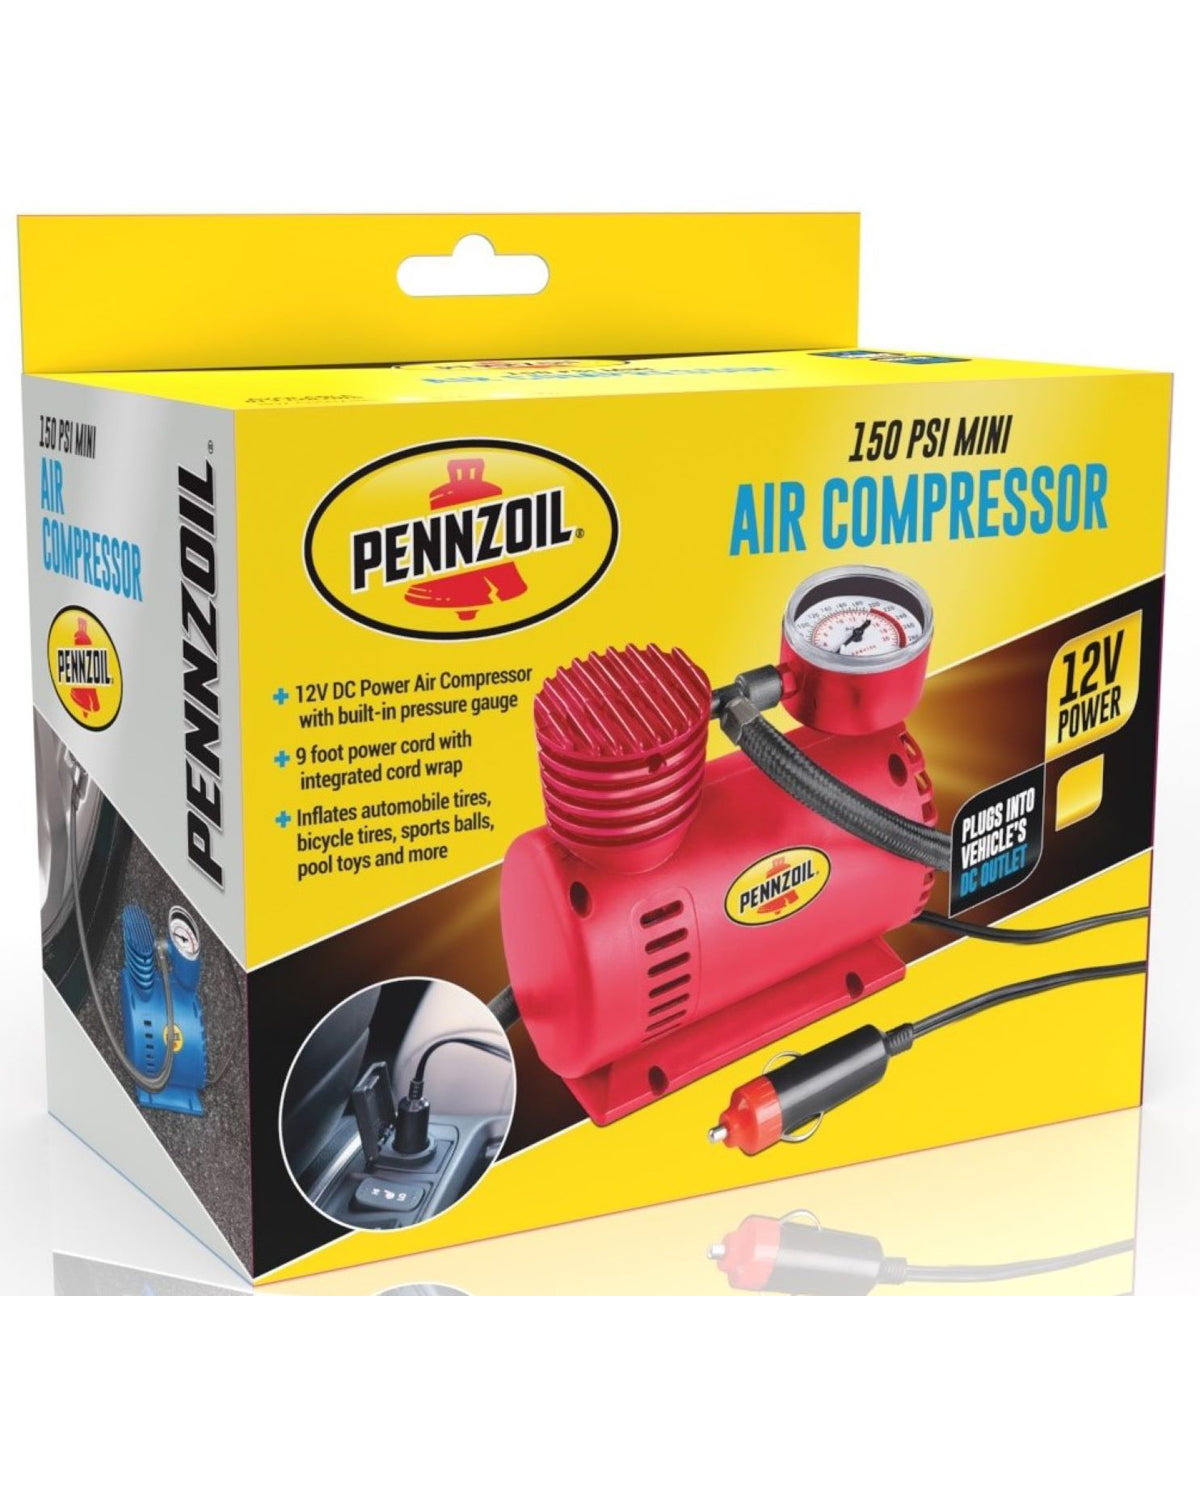 Pennzoil Miniature Air Compressor - 150 PSI